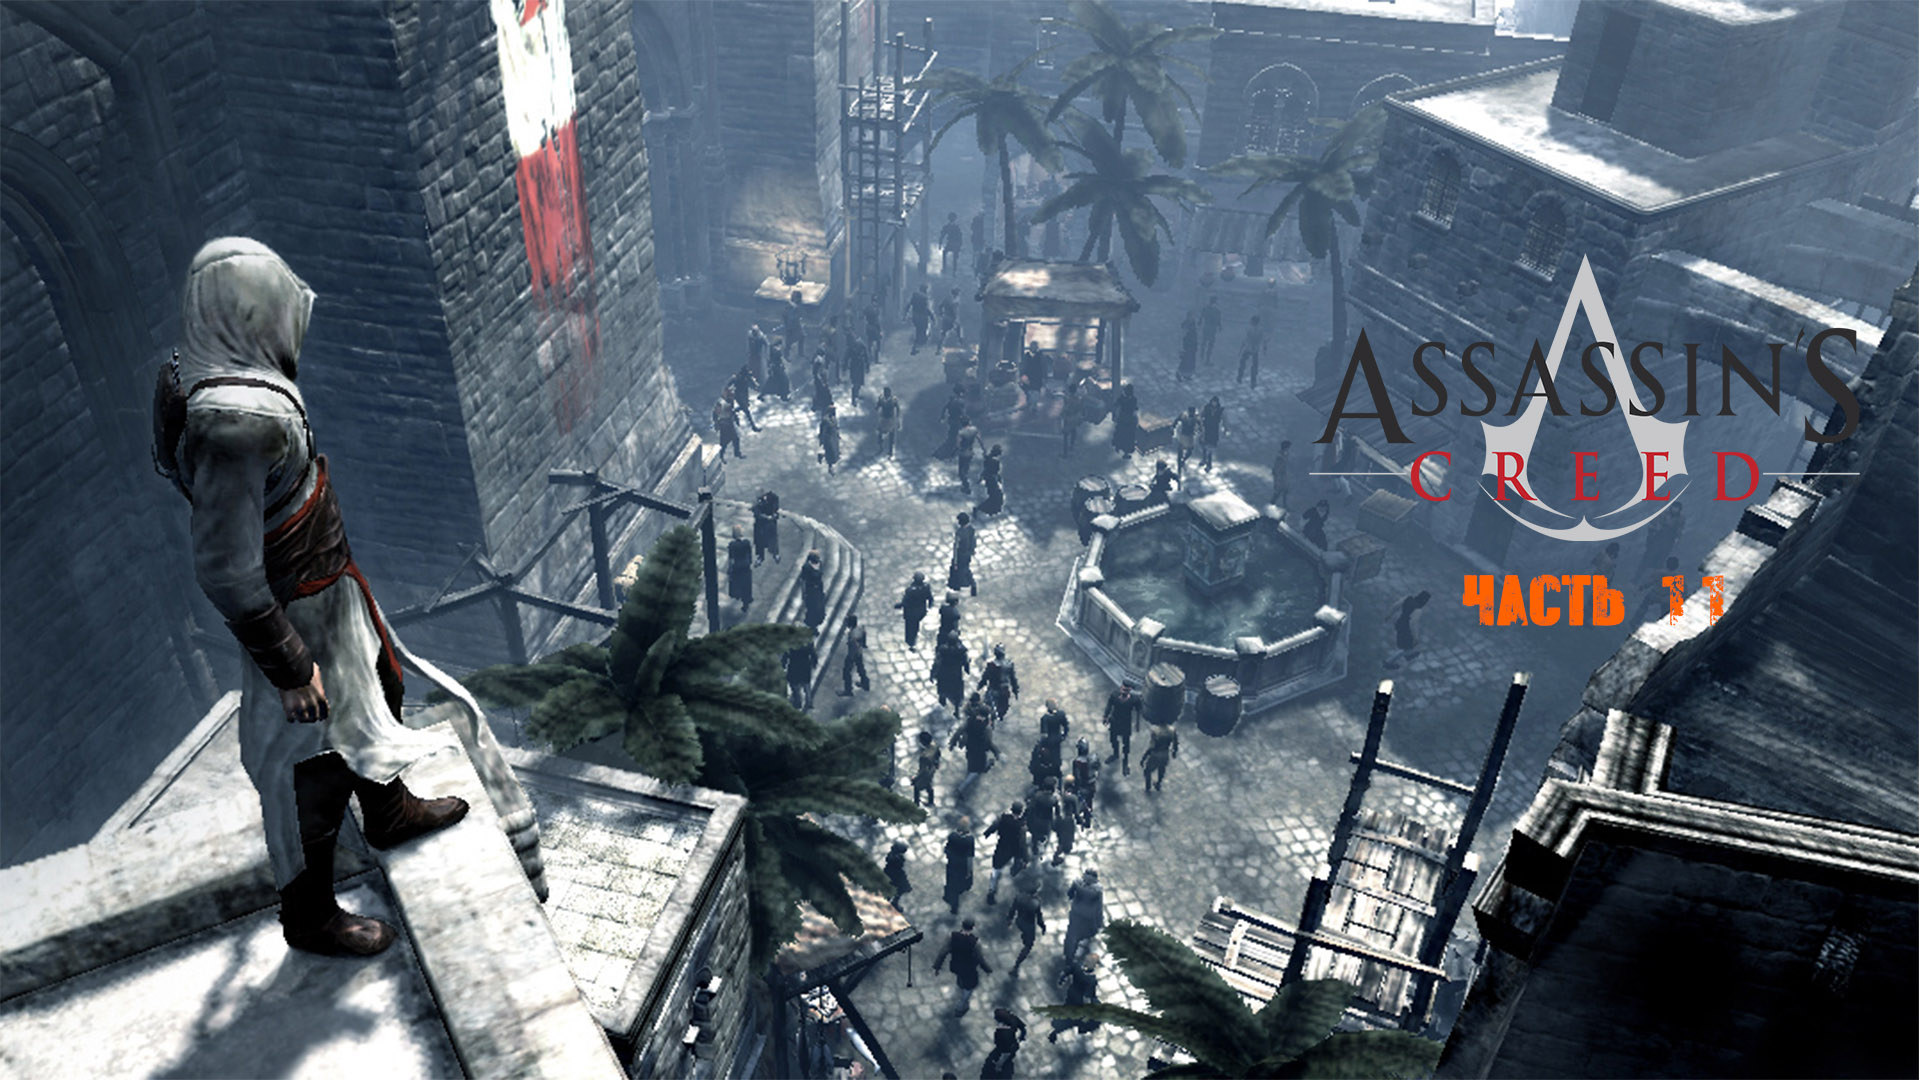 Ассасин крид первая часть. Assassin's Creed 1 часть. Ассасин Крид 2007. Assassin’s Creed (игра) 2007. Ассасин Крид 1 ассасин.